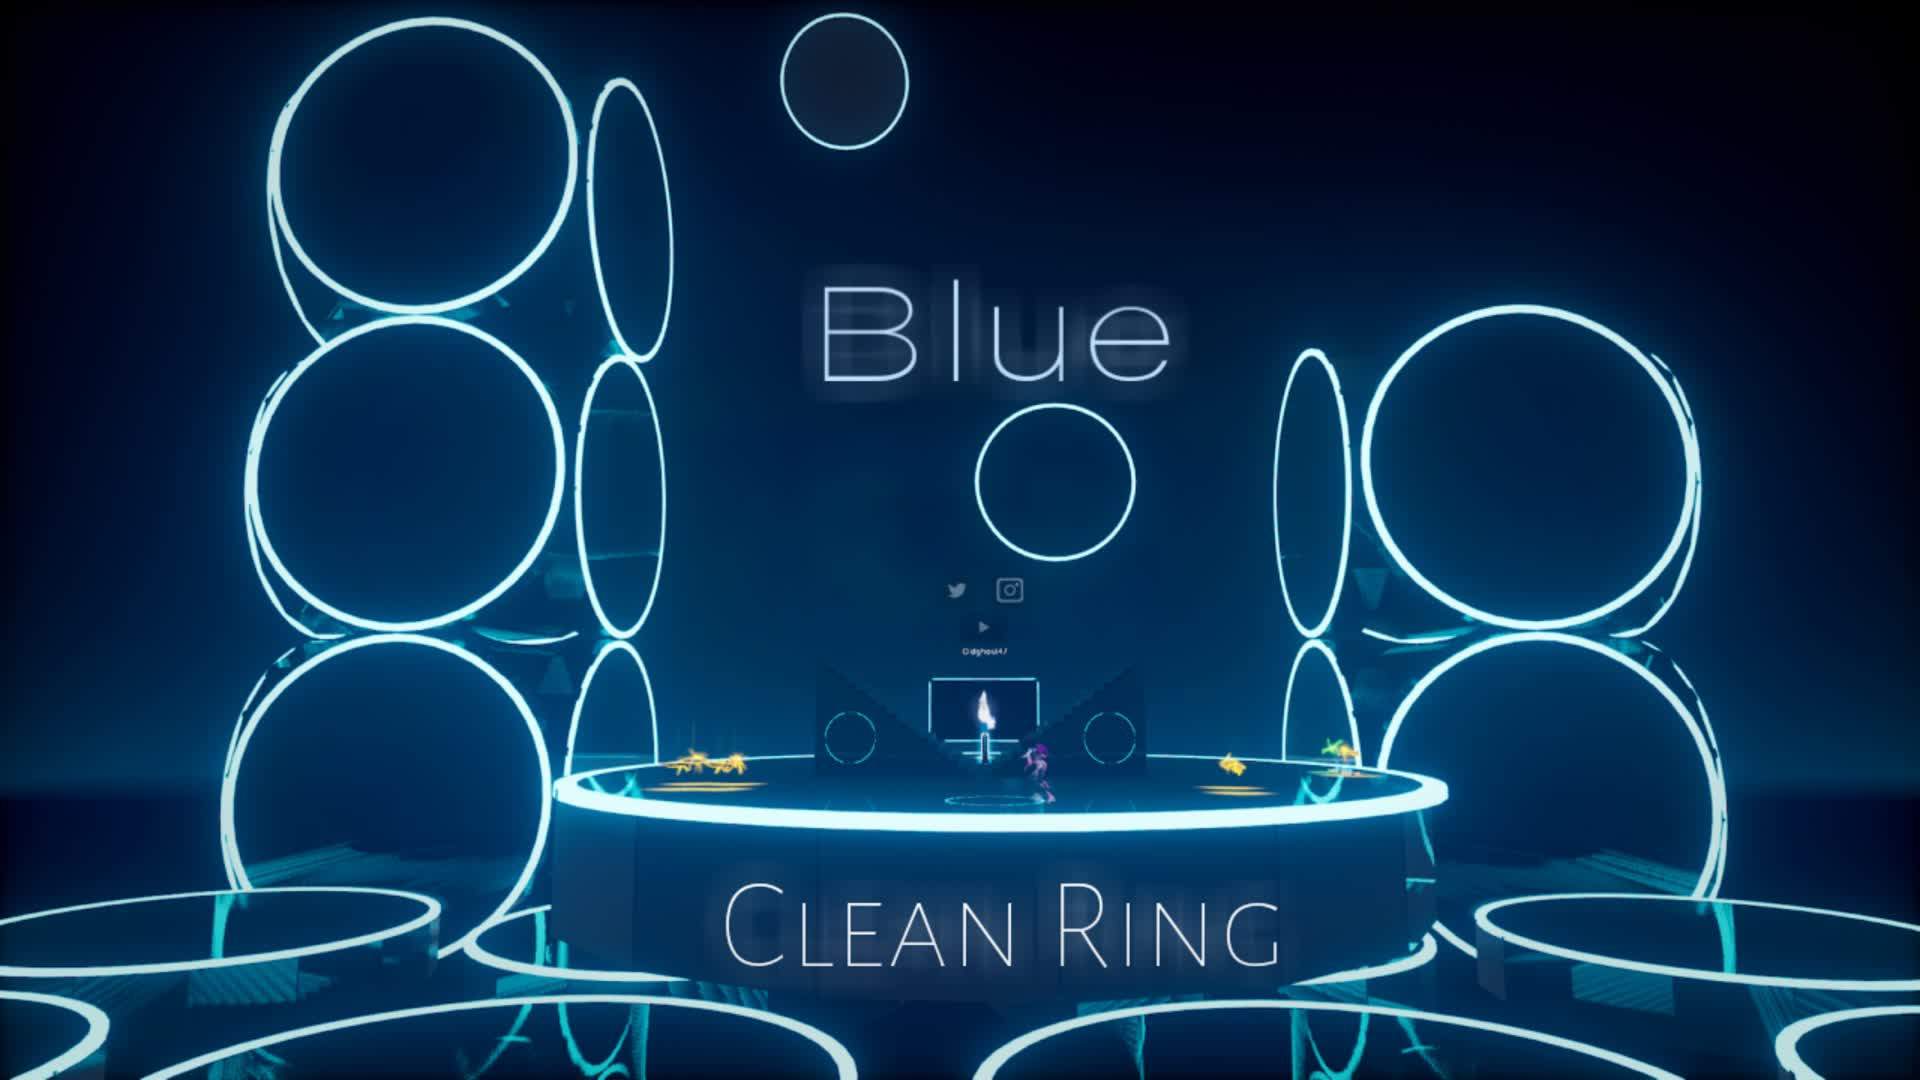 CLEAN RING 1V1 [BLUE] •NO DELAY•